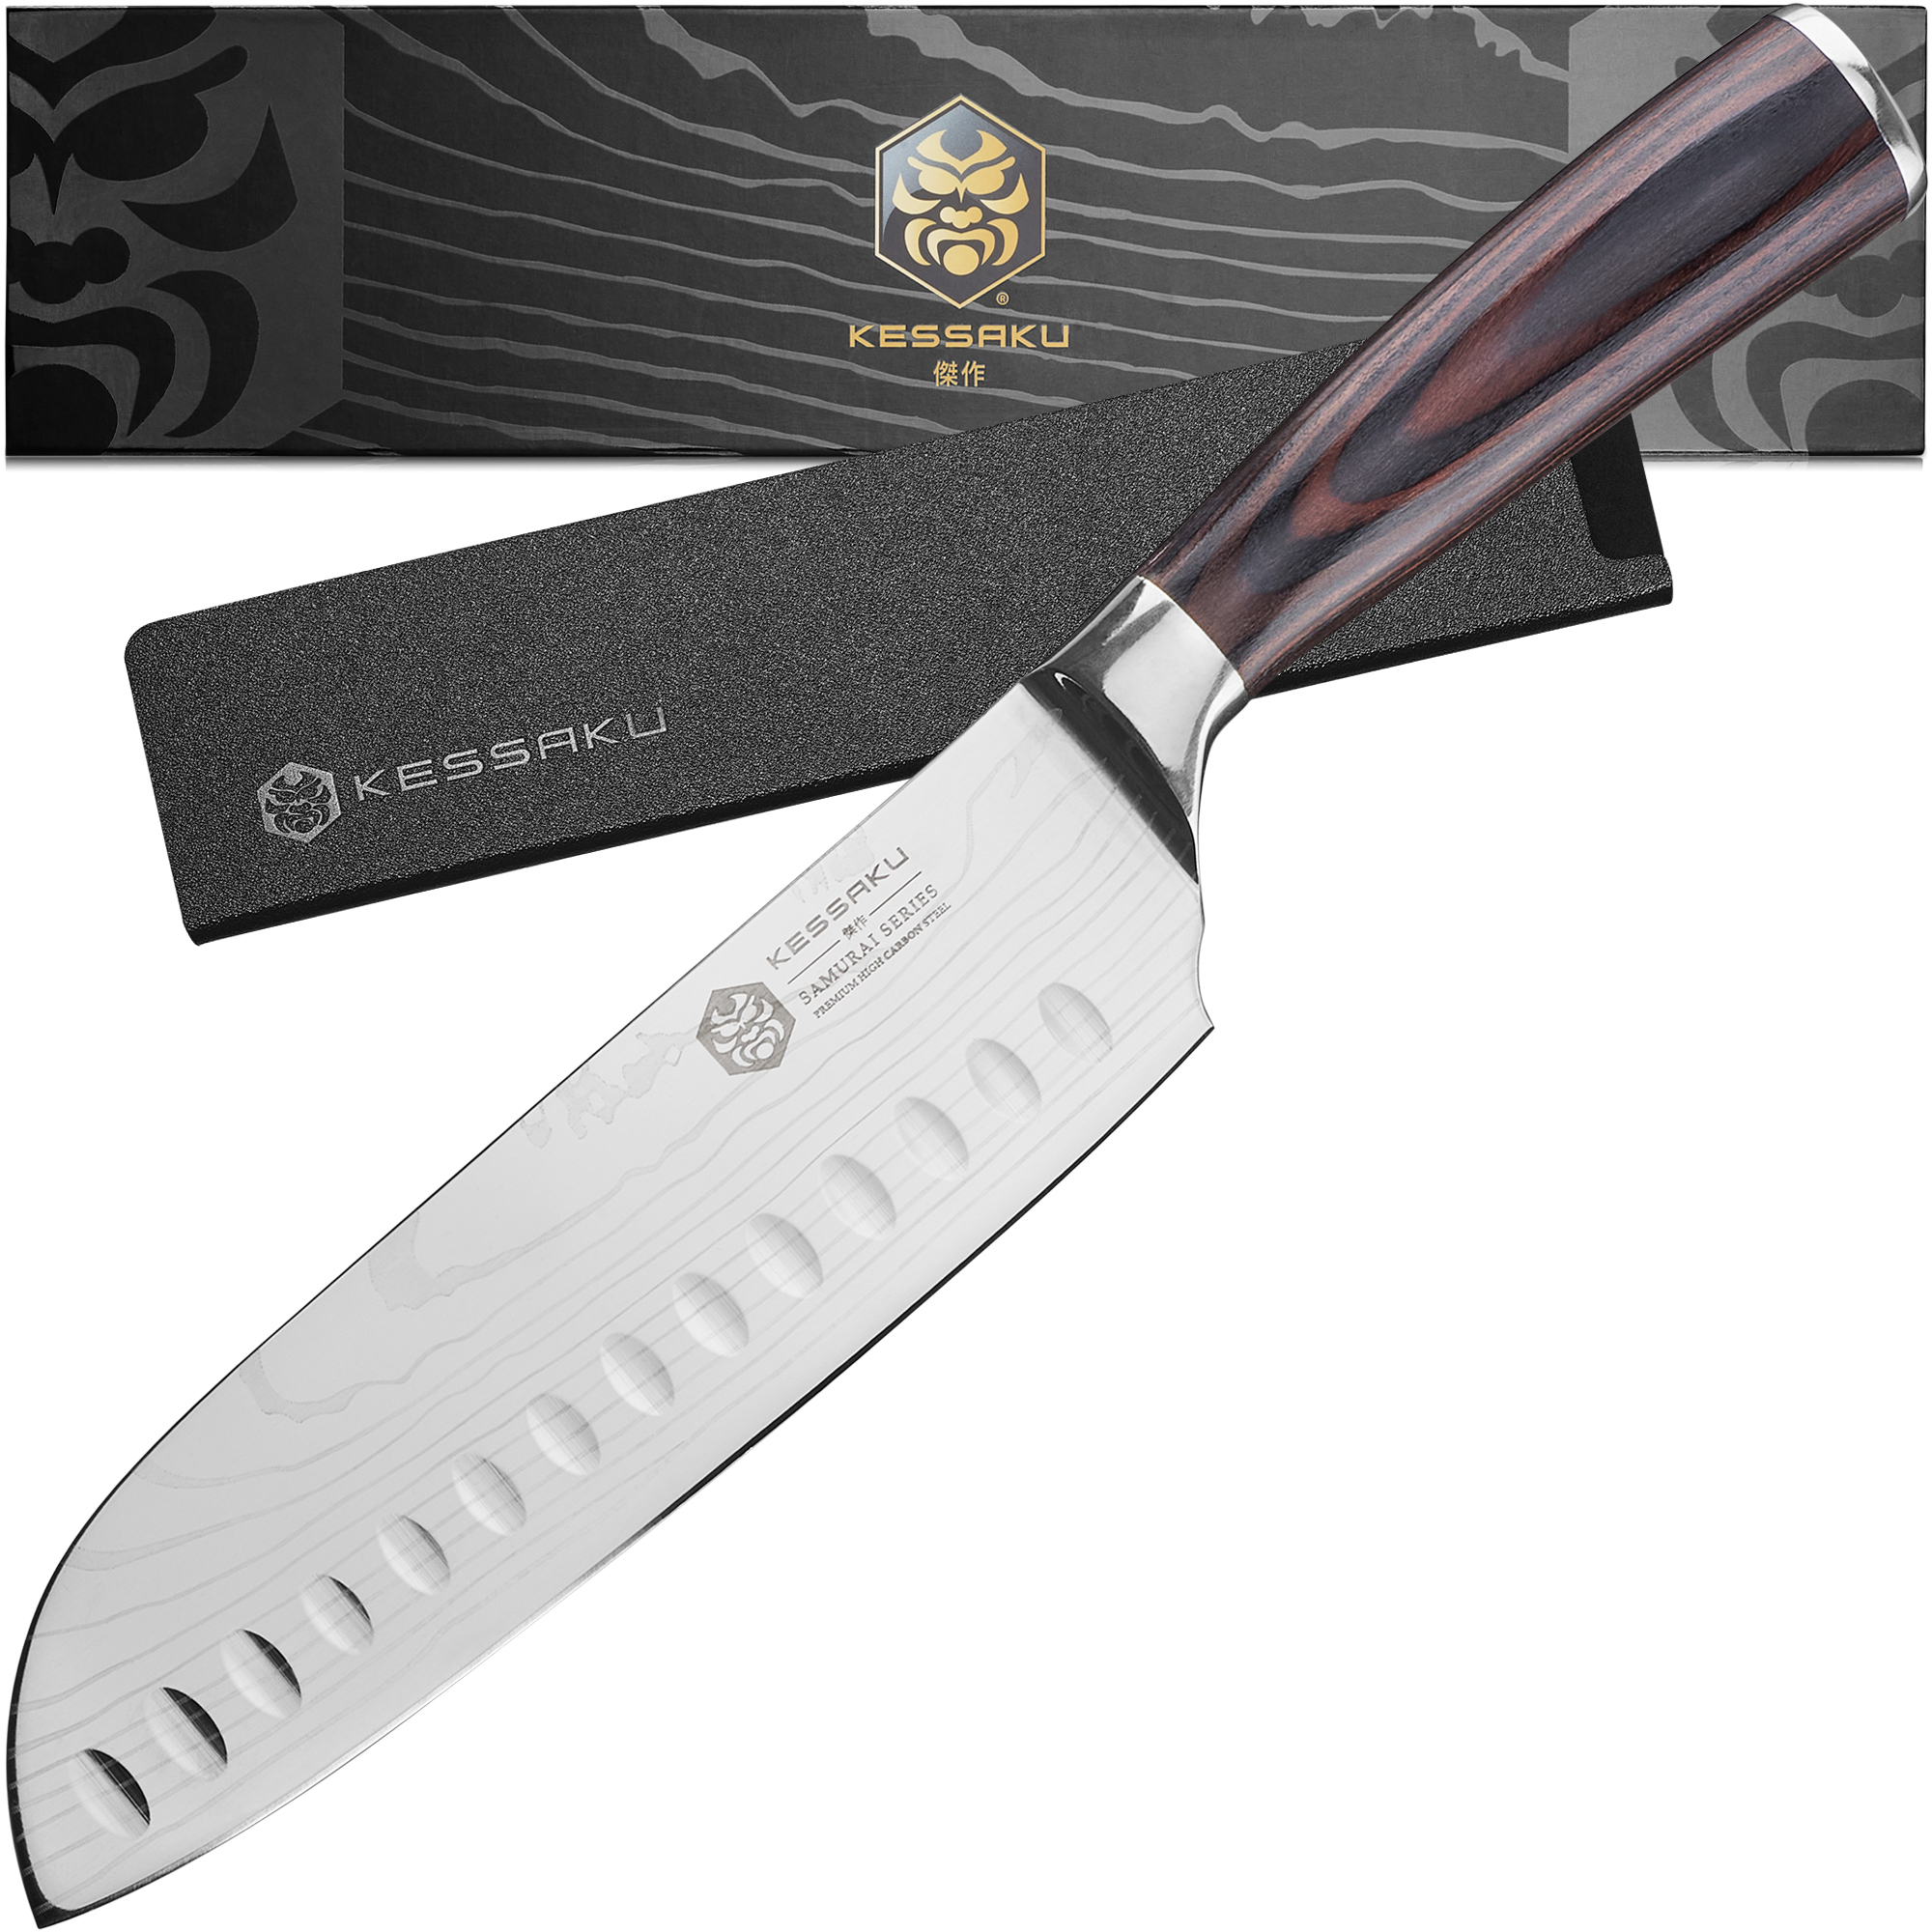 Kessaku Santoku Knife - 7 inch - Samurai Series - Razor Sharp Kitchen Knife - 7Cr17MoV High Carbon Stainless Steel - Wood Handle